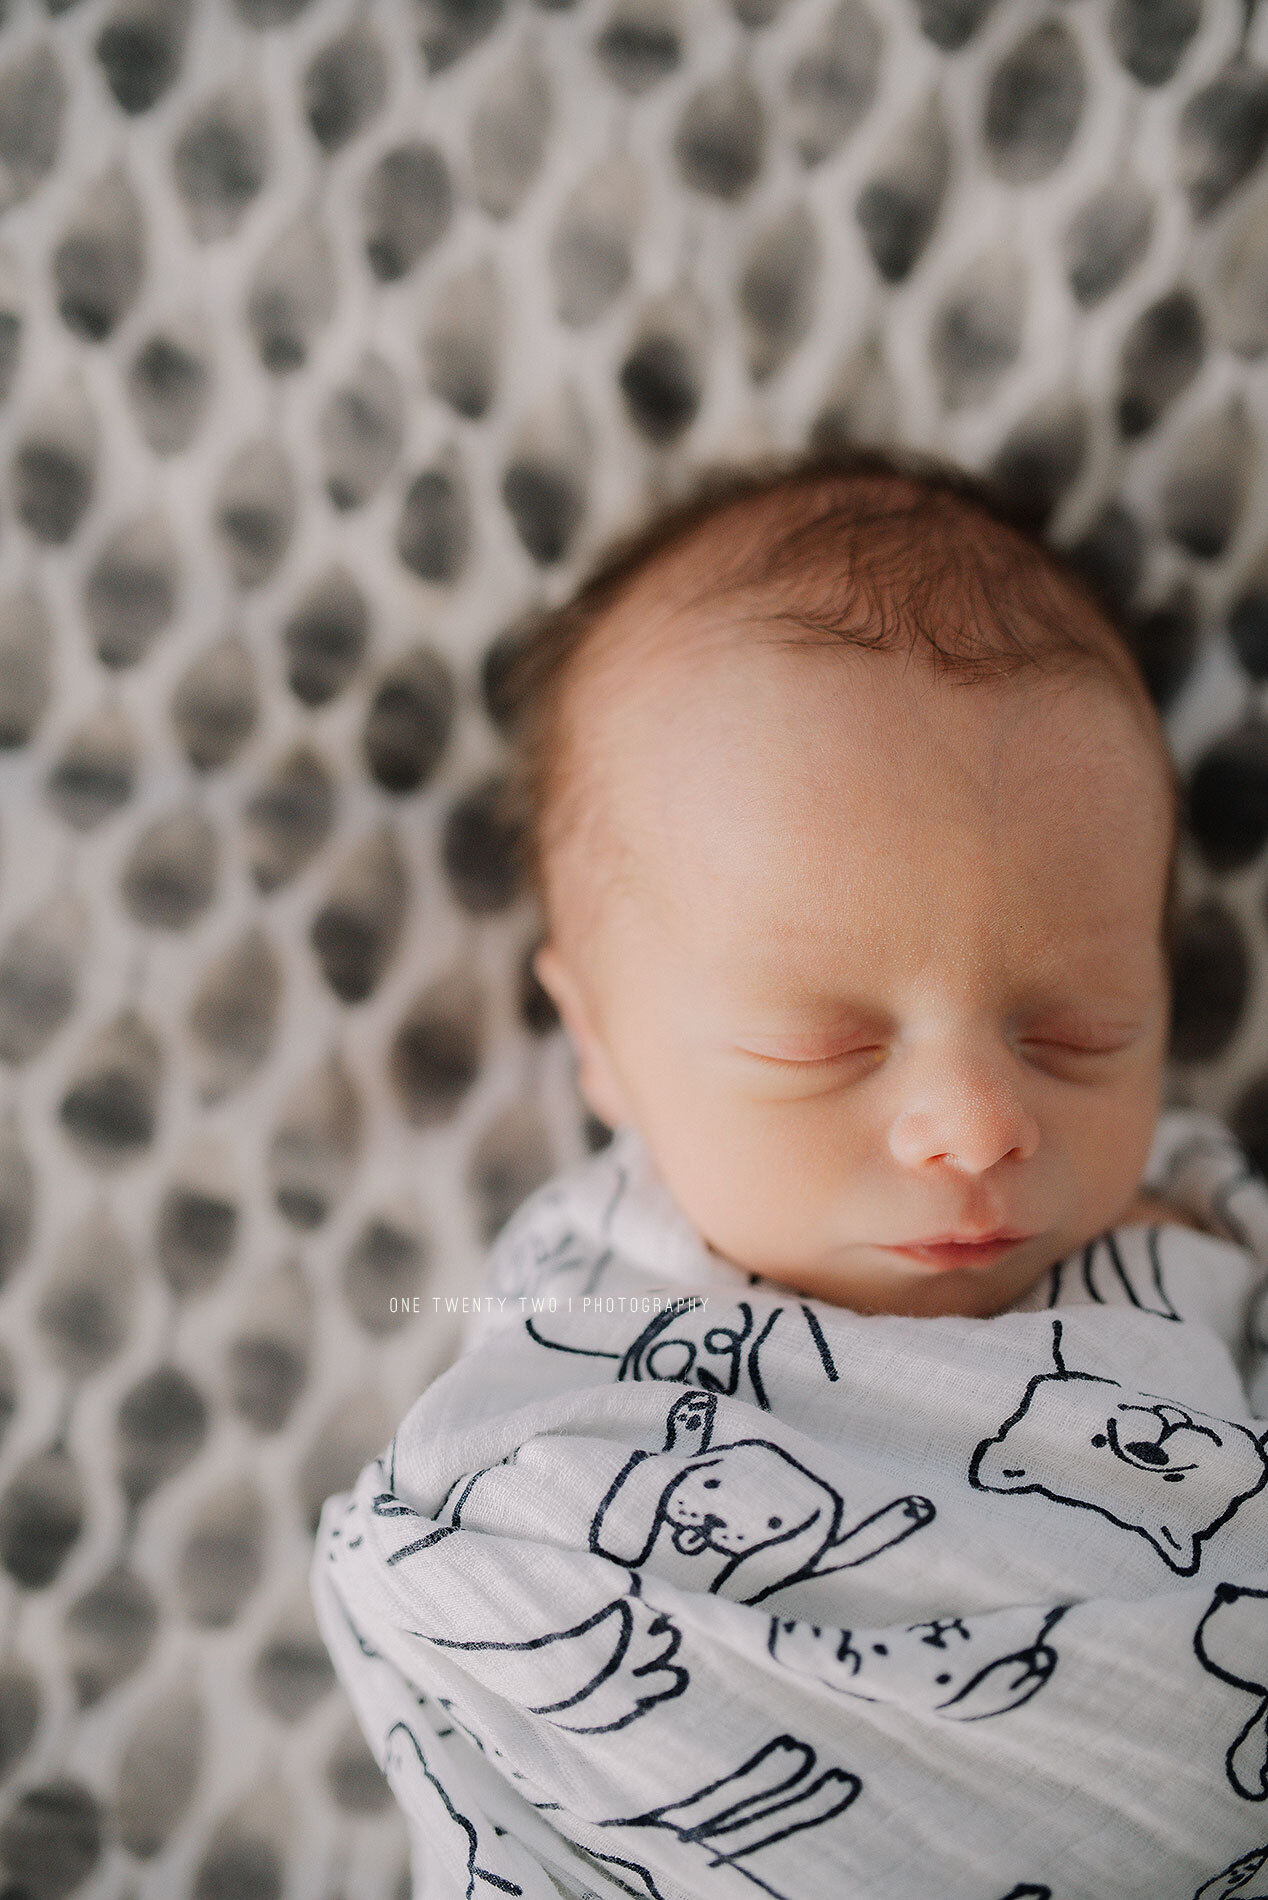 upclose-newborn-details-photography-tips-one-twenty-two-photography.jpg